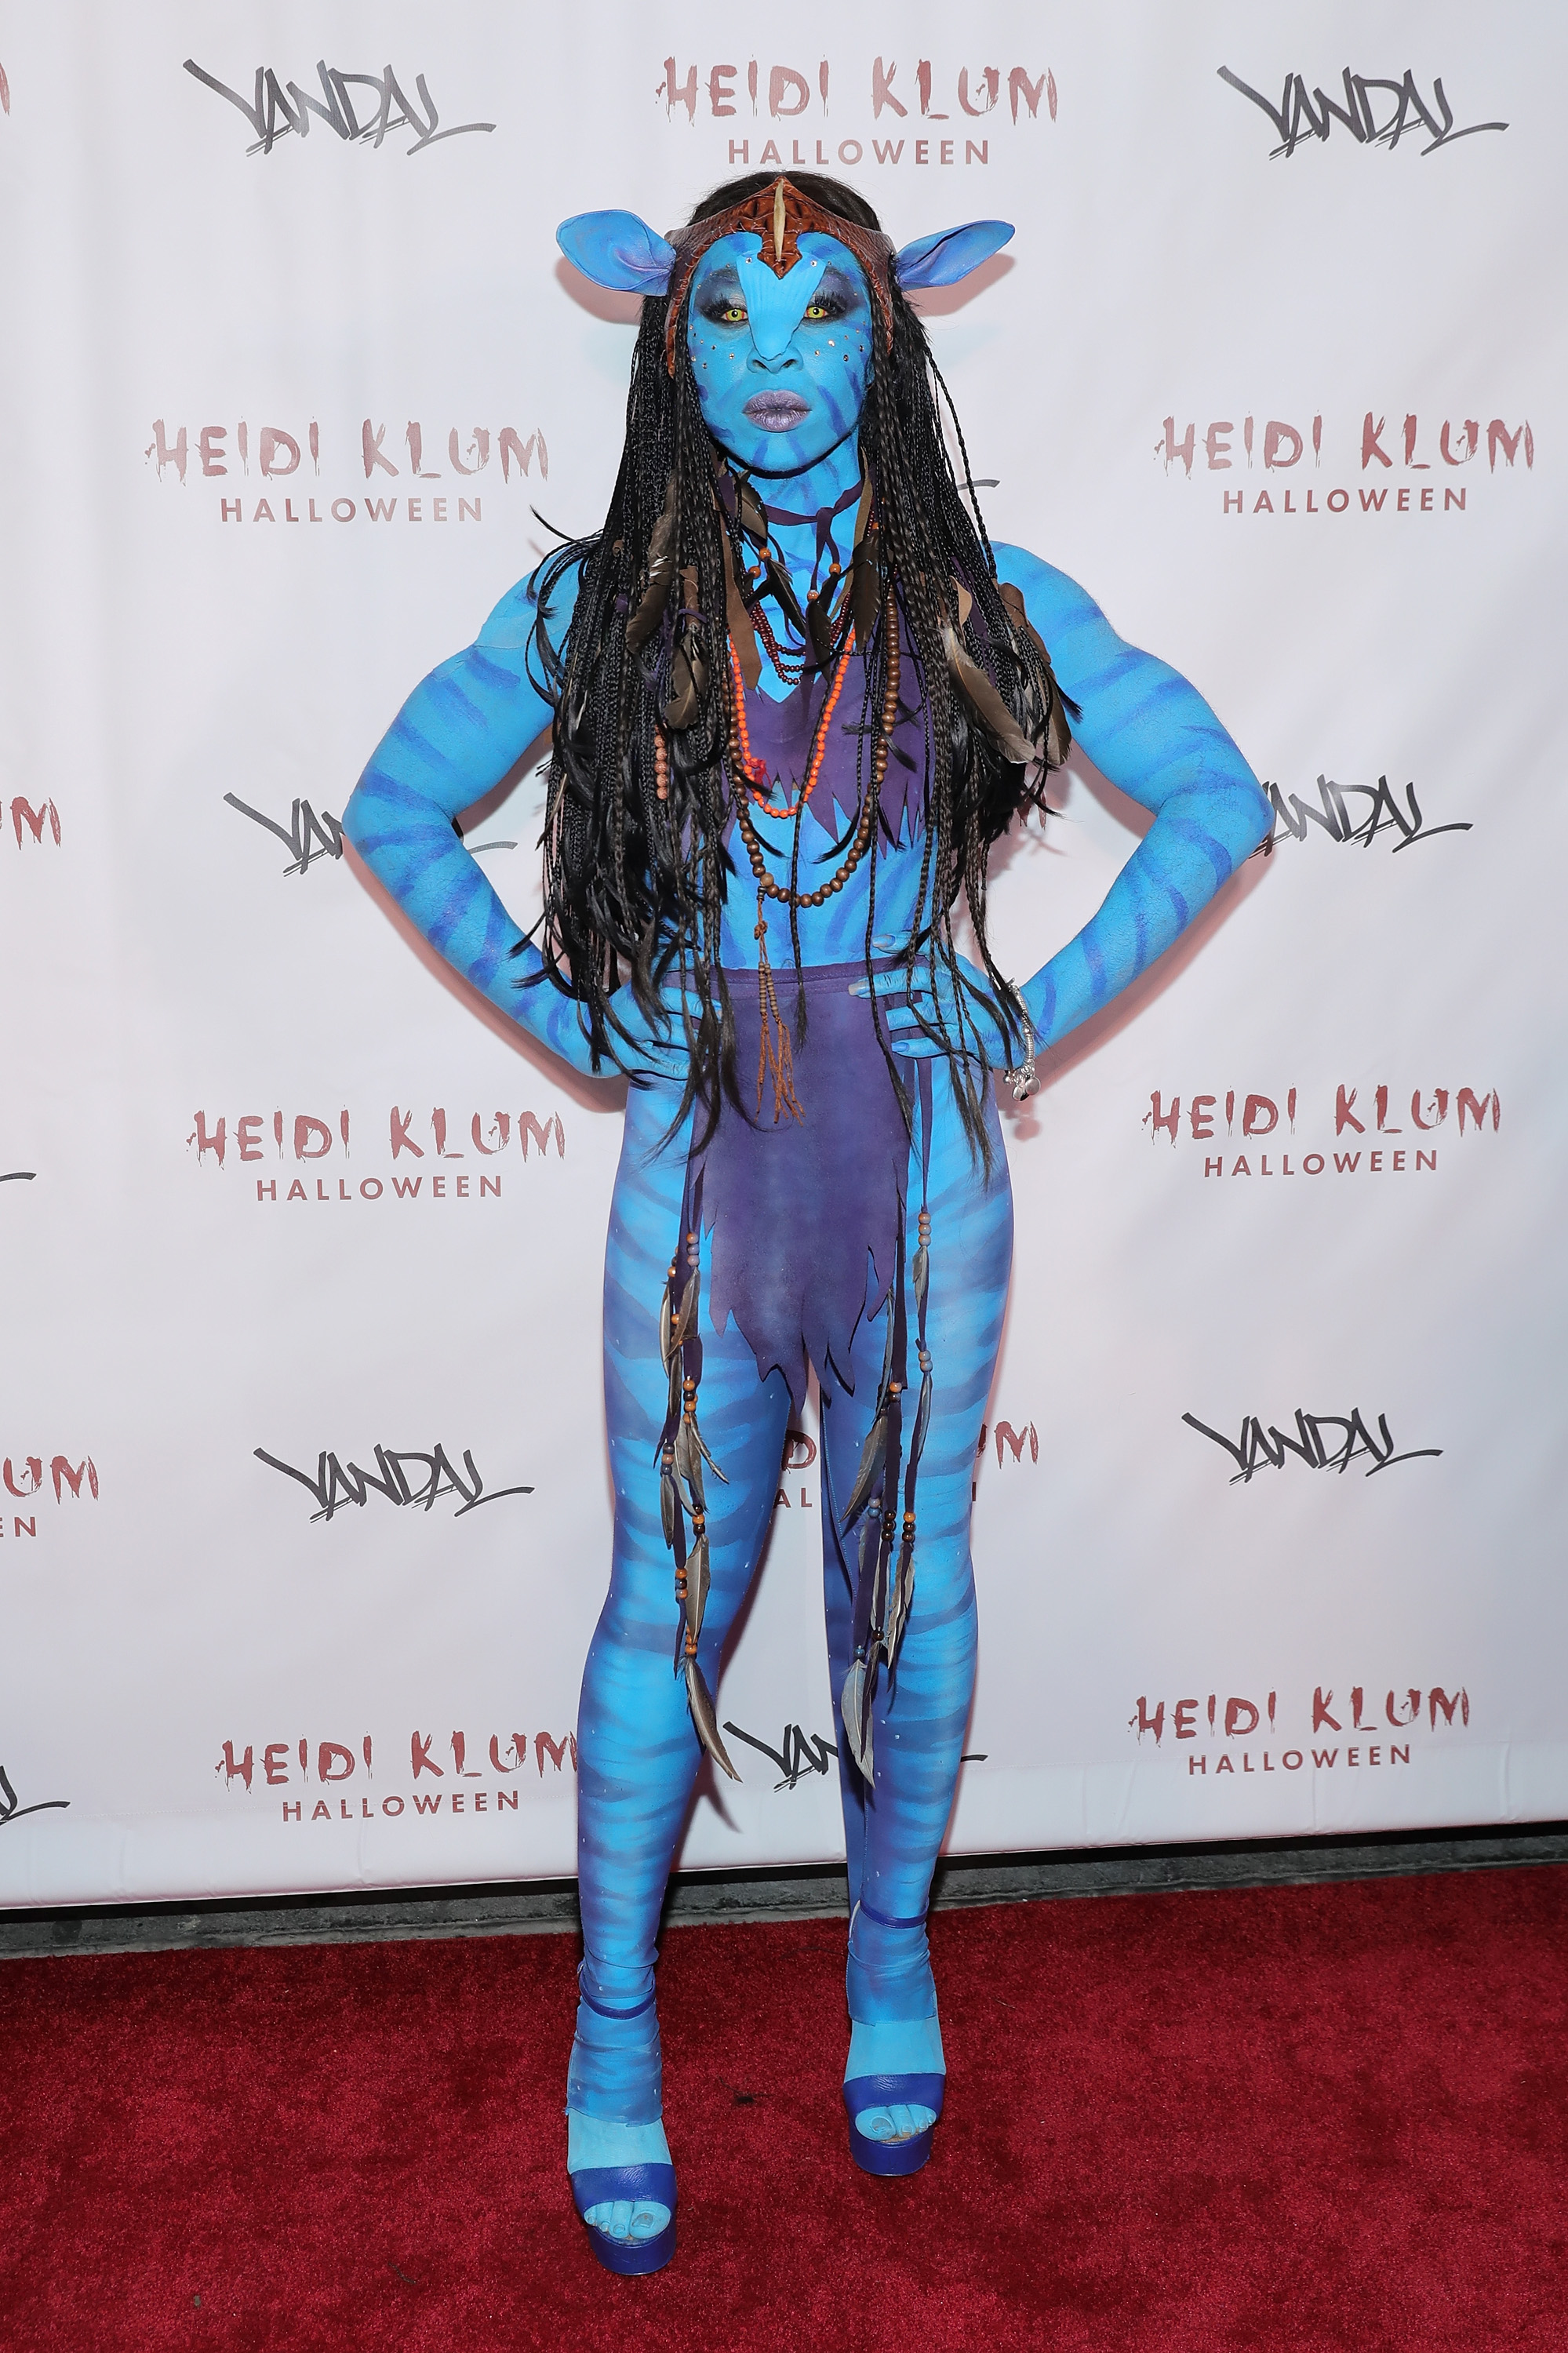 Heidi Klum's 17th Annual Halloween Party sponsored by SVEDKA Vodka at Vandal New York - Arrivals